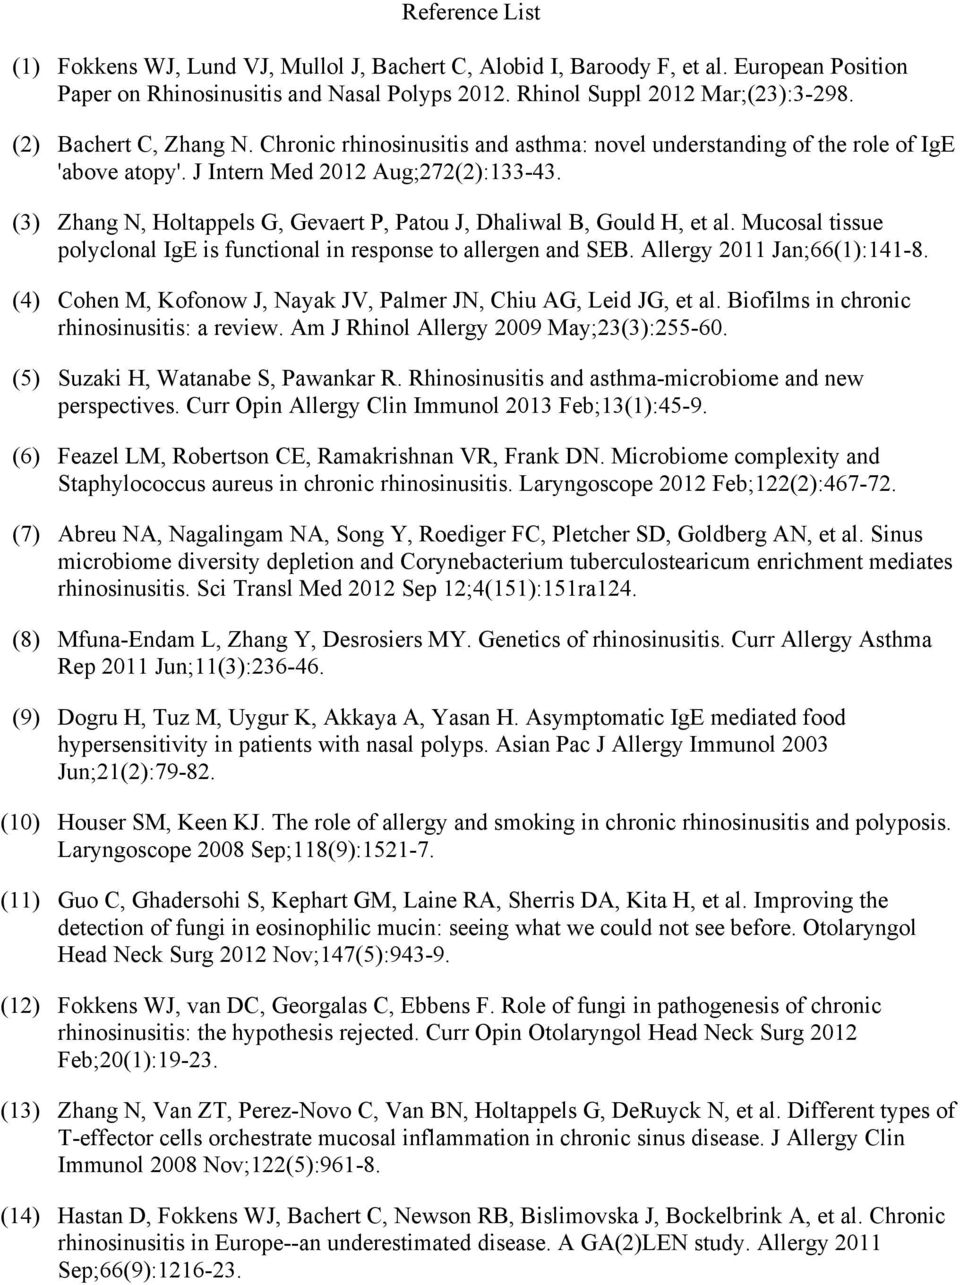 (3) Zhang N, Holtappels G, Gevaert P, Patou J, Dhaliwal B, Gould H, et al. Mucosal tissue polyclonal IgE is functional in response to allergen and SEB. Allergy 2011 Jan;66(1):141-8.